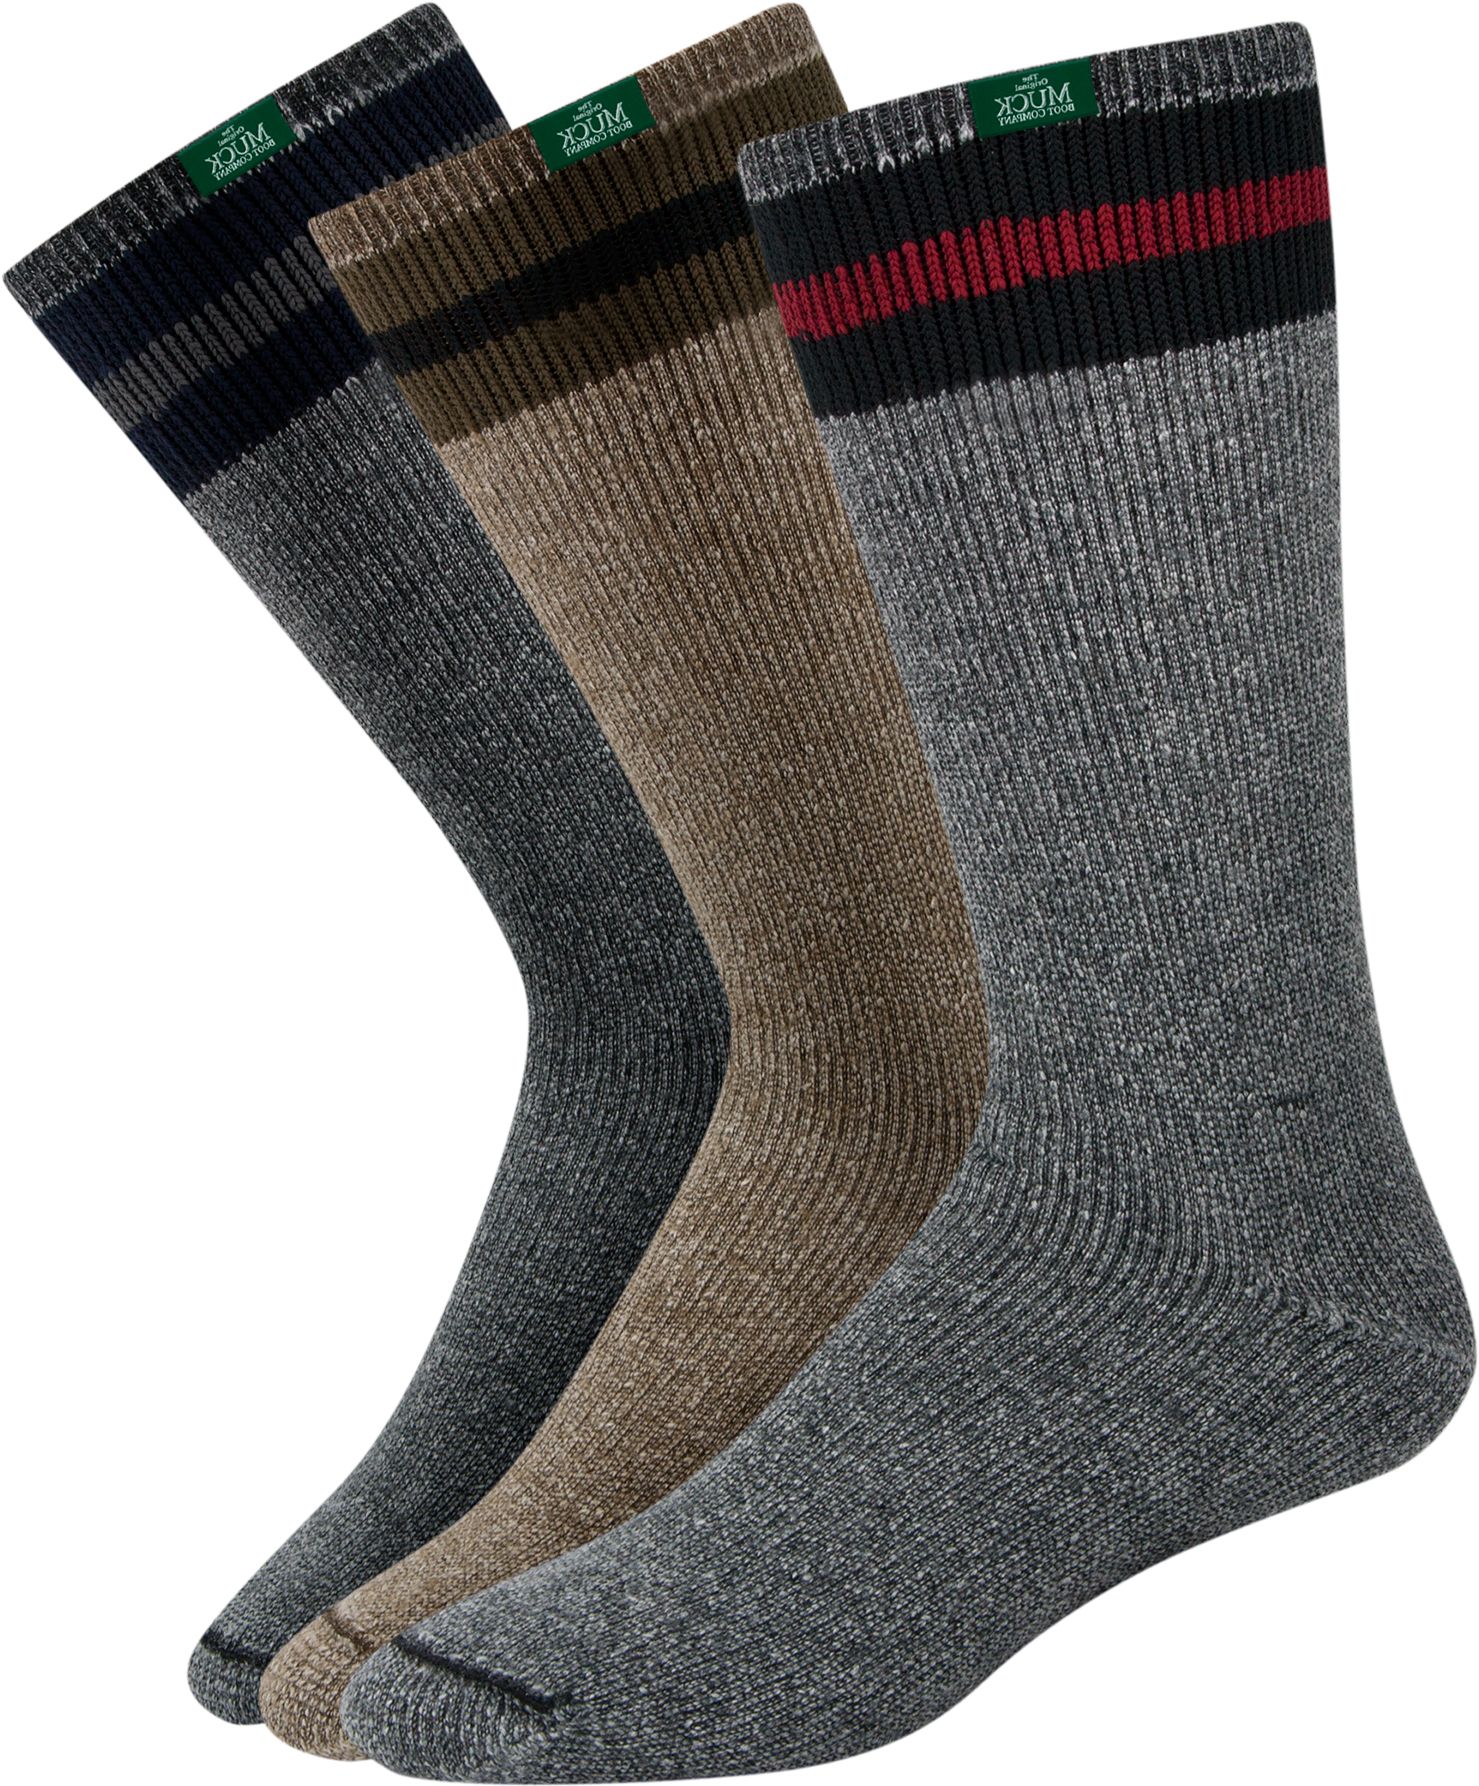 Muck's All American Wool Boot Socks - 3 